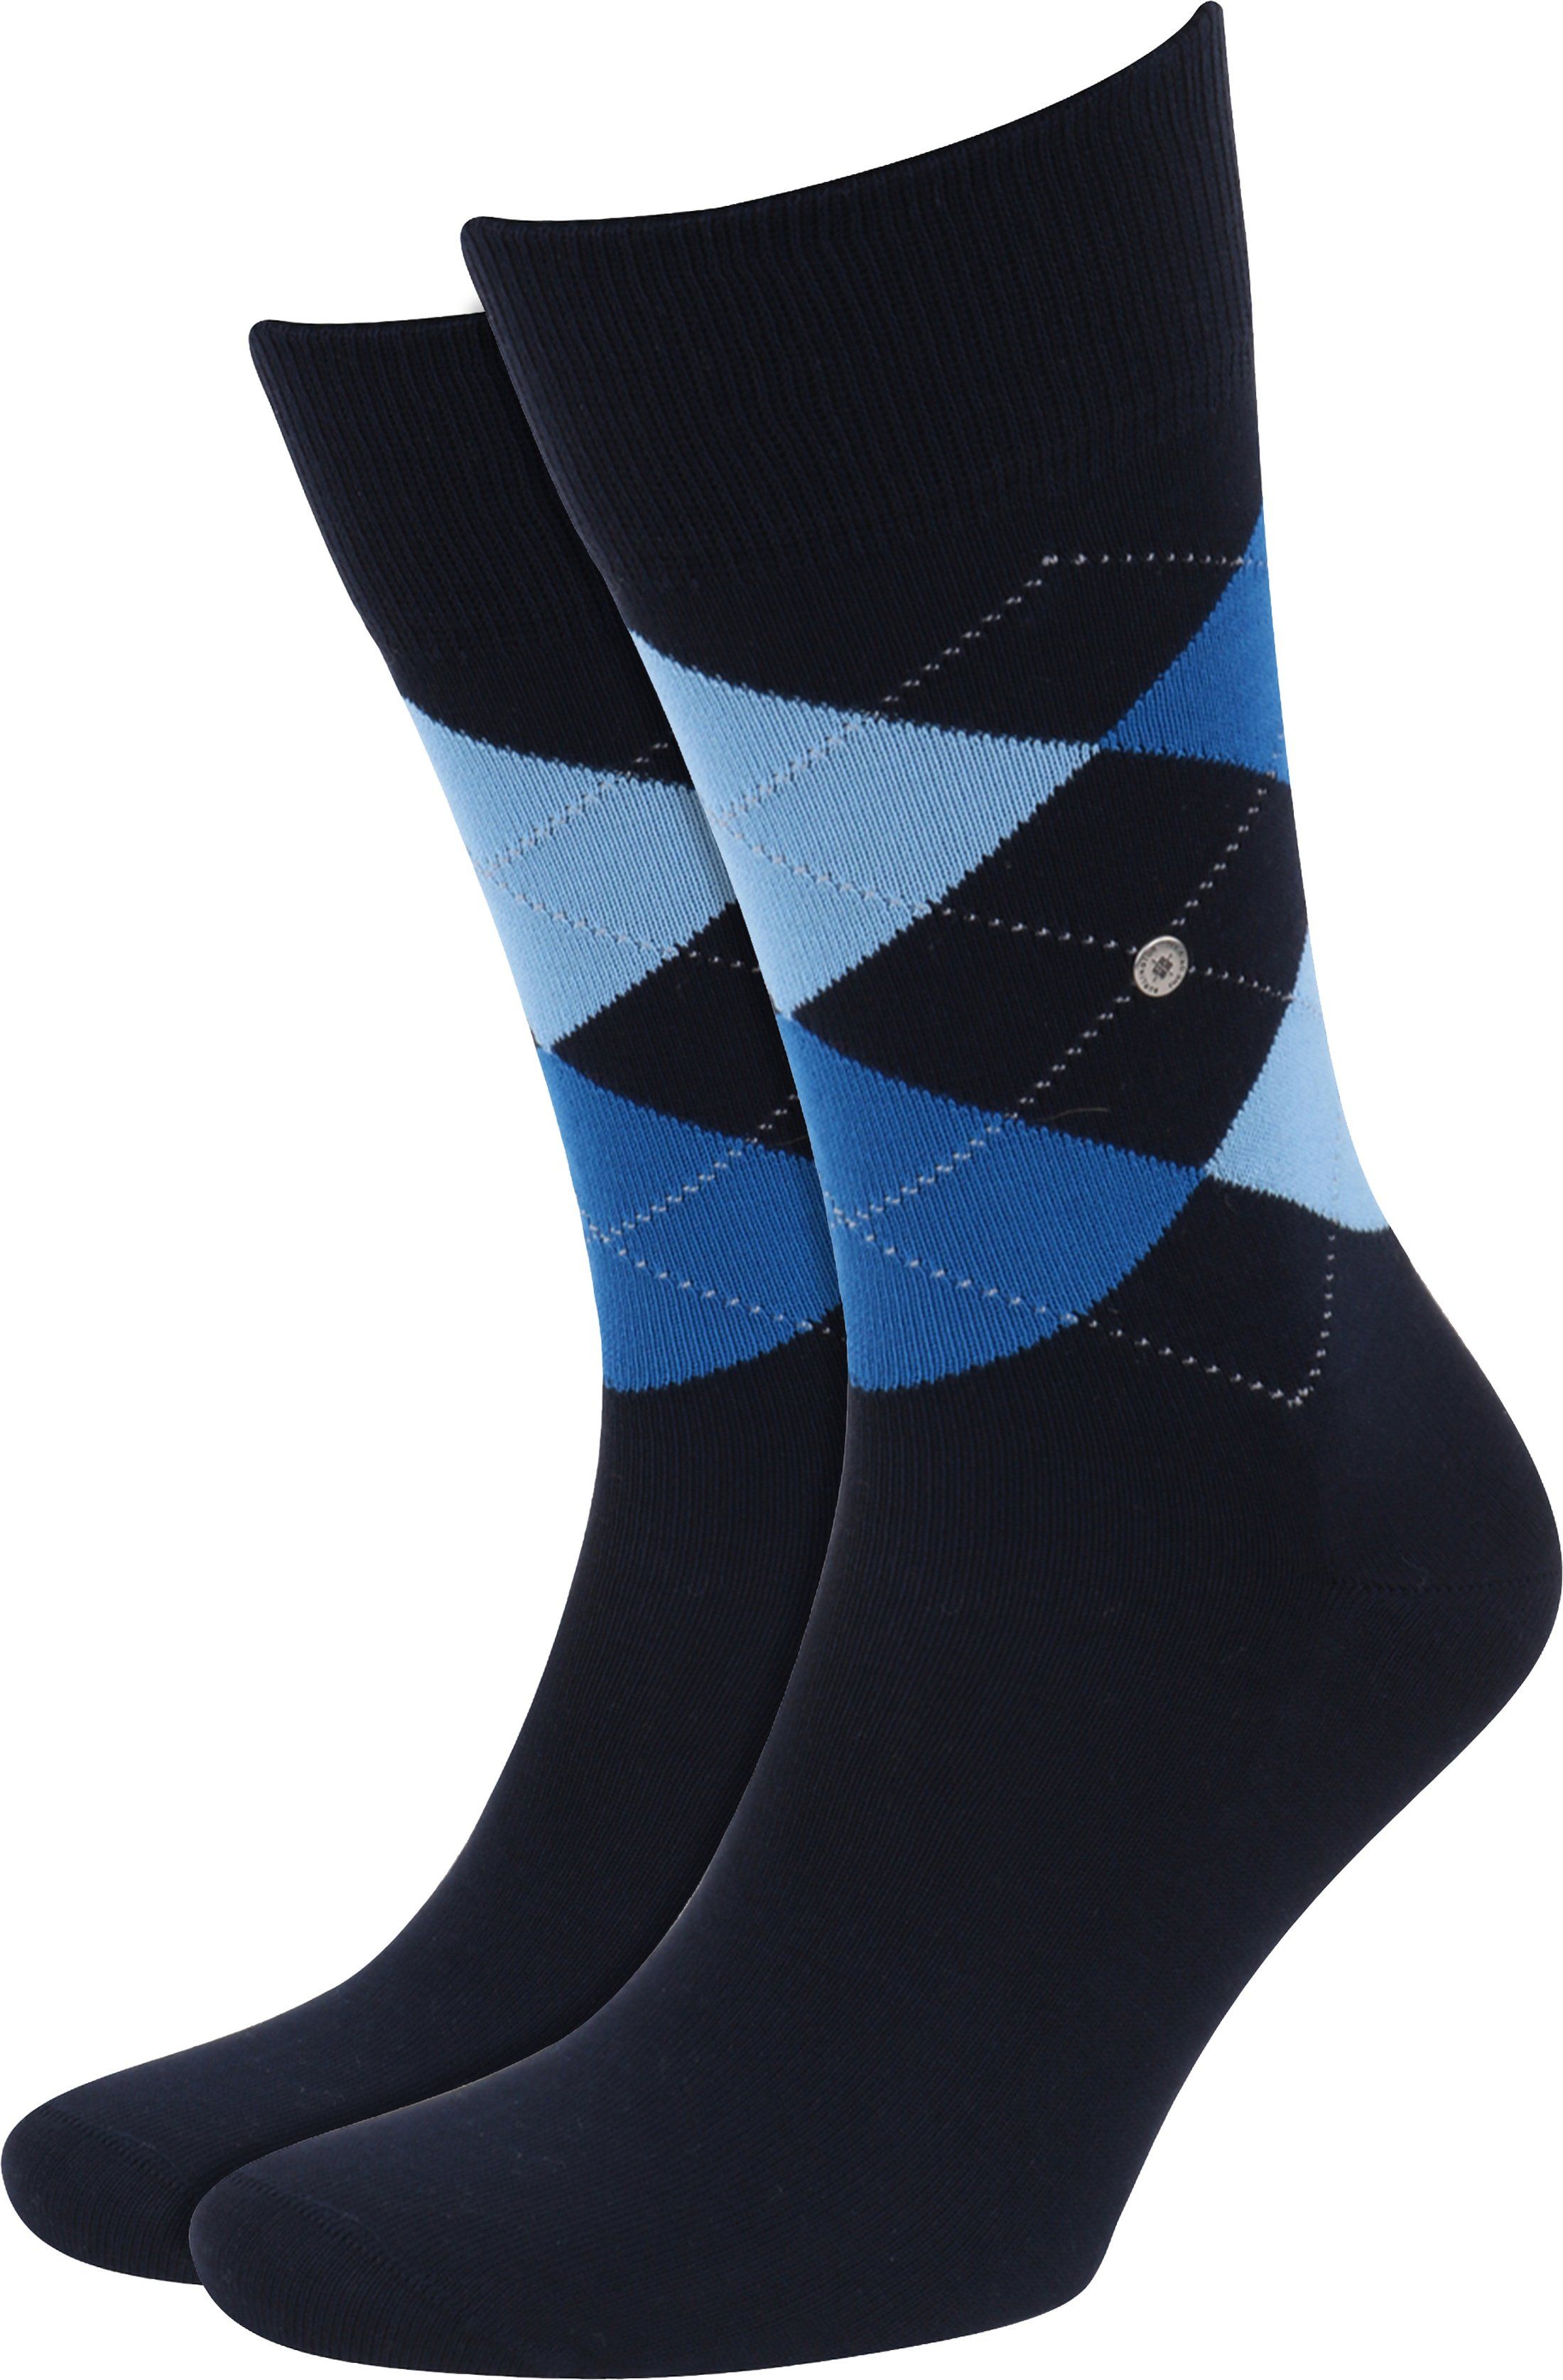 Burlington Socks Checkered Cotton 6120 Dark Blue Black Blue size 40-46